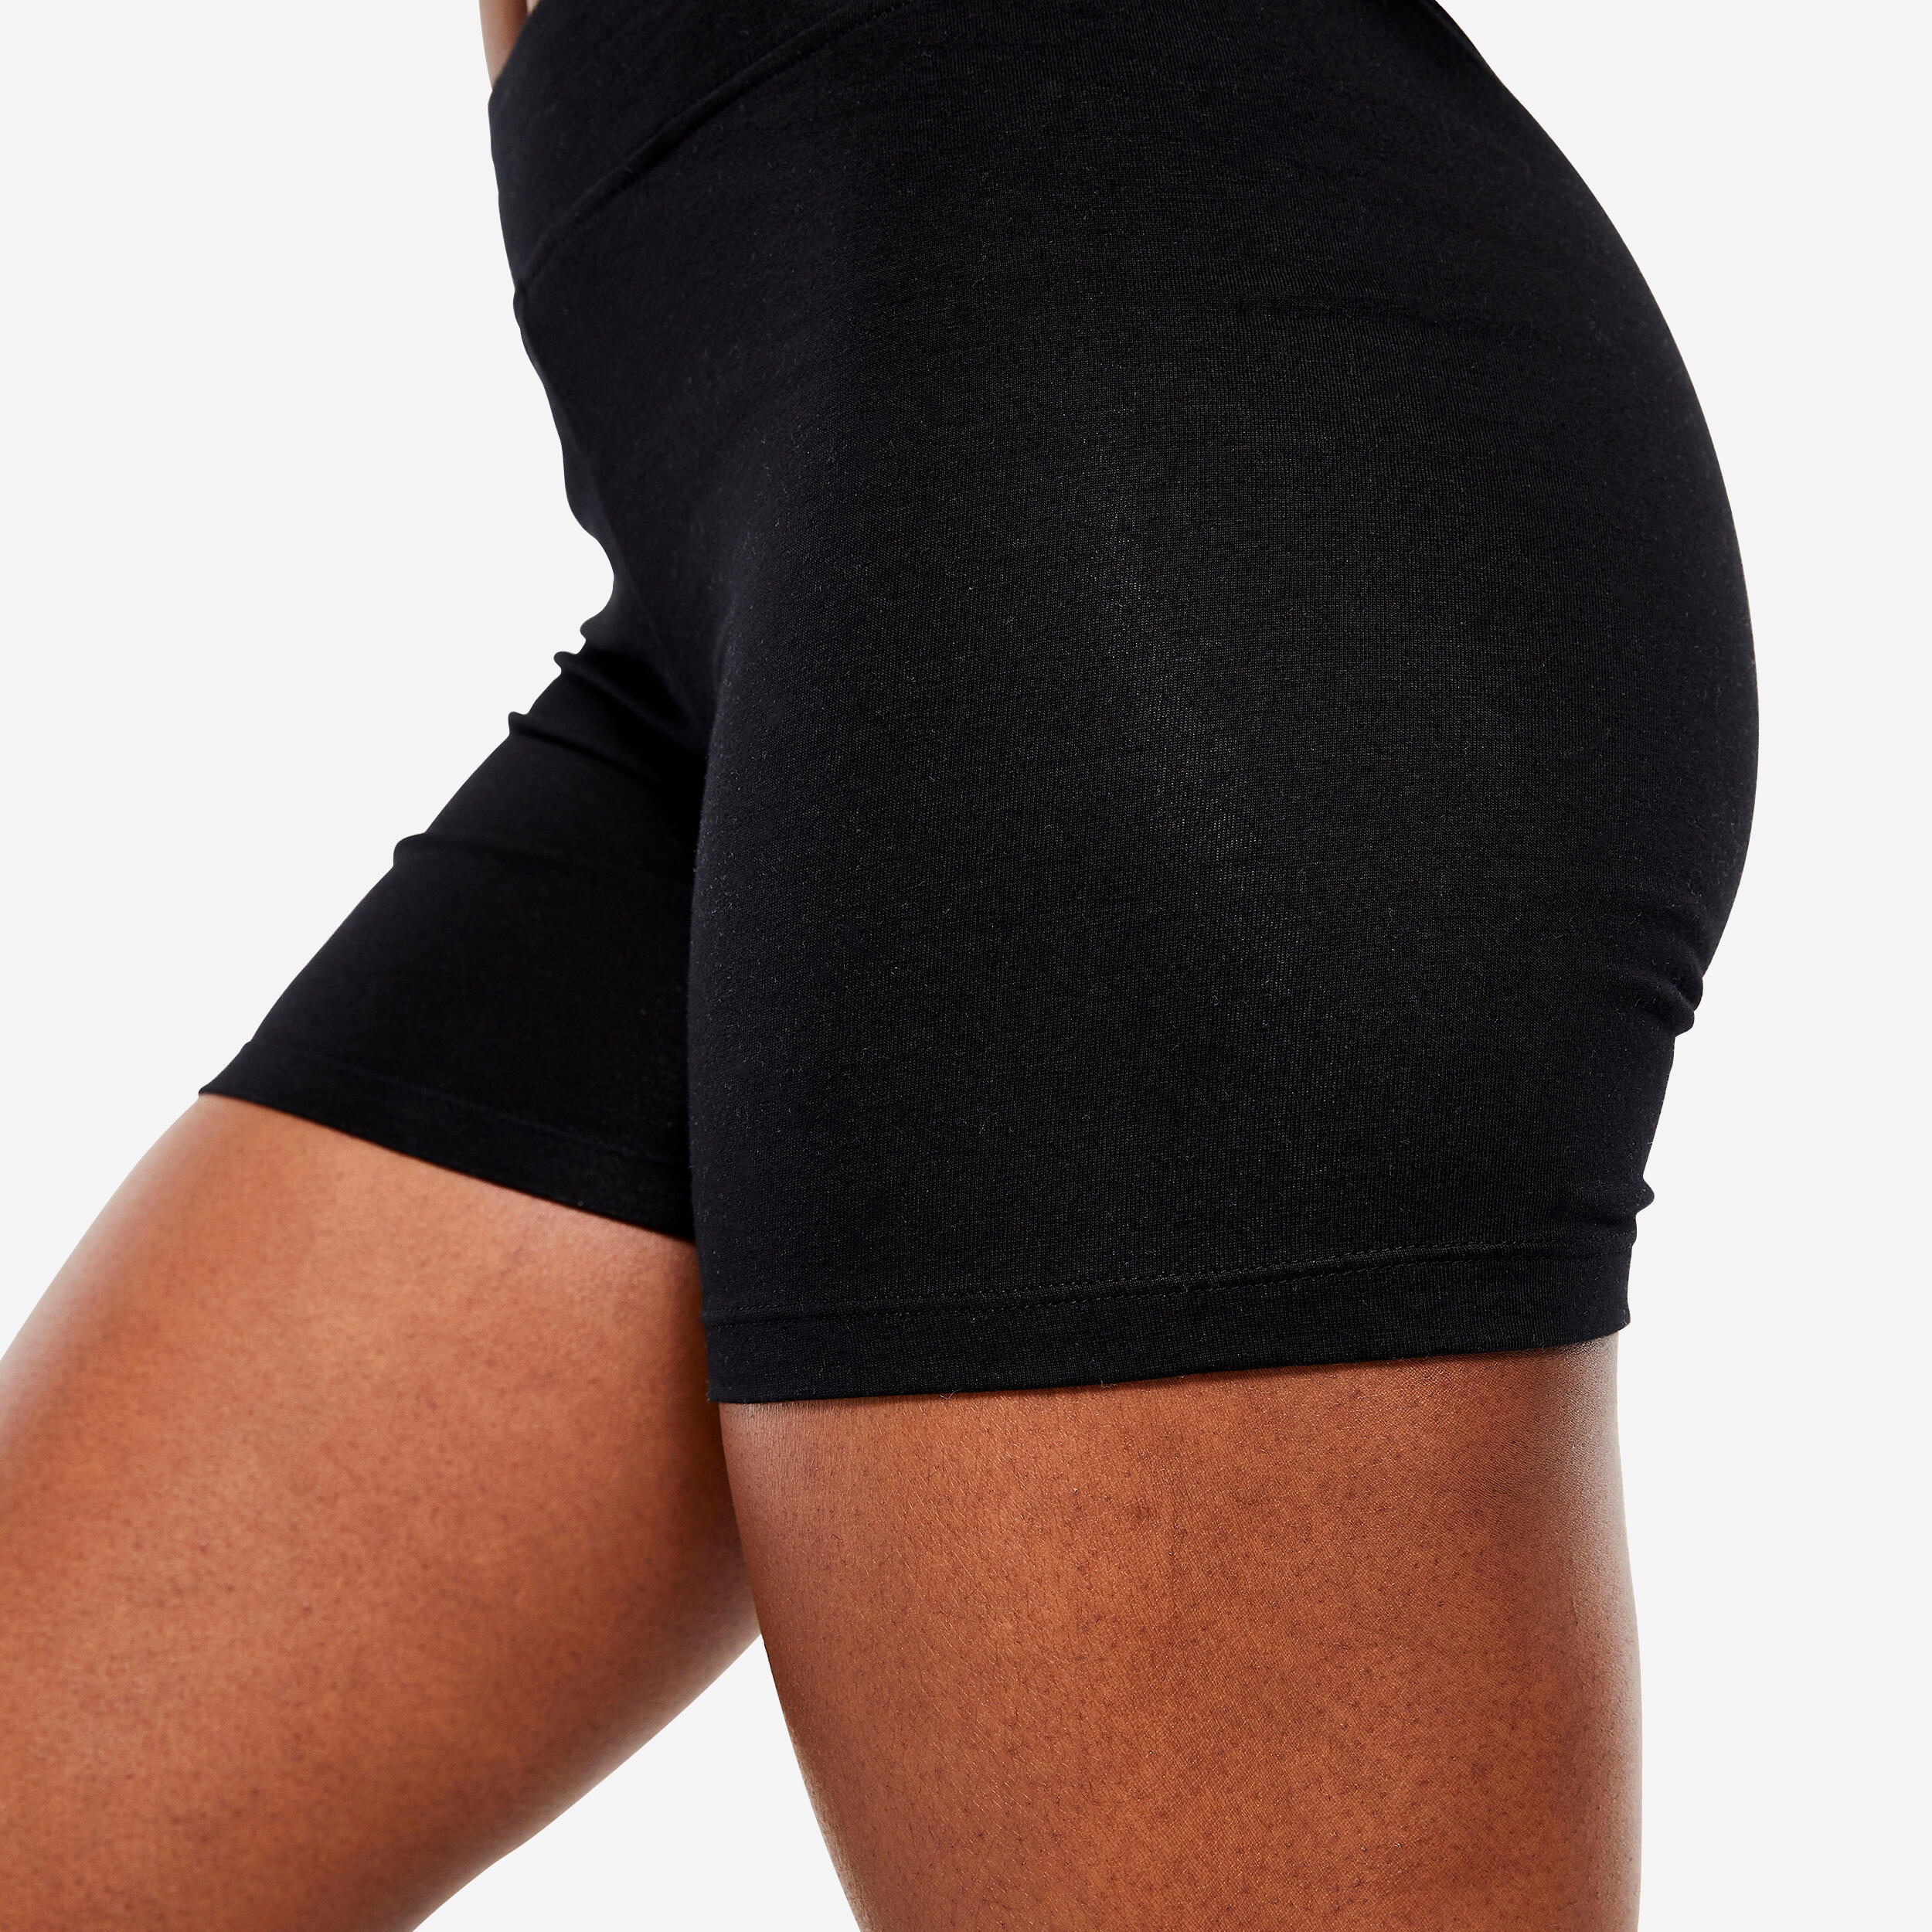 Women's Fitness Slim-Fit Shorts 500 - Black 5/5